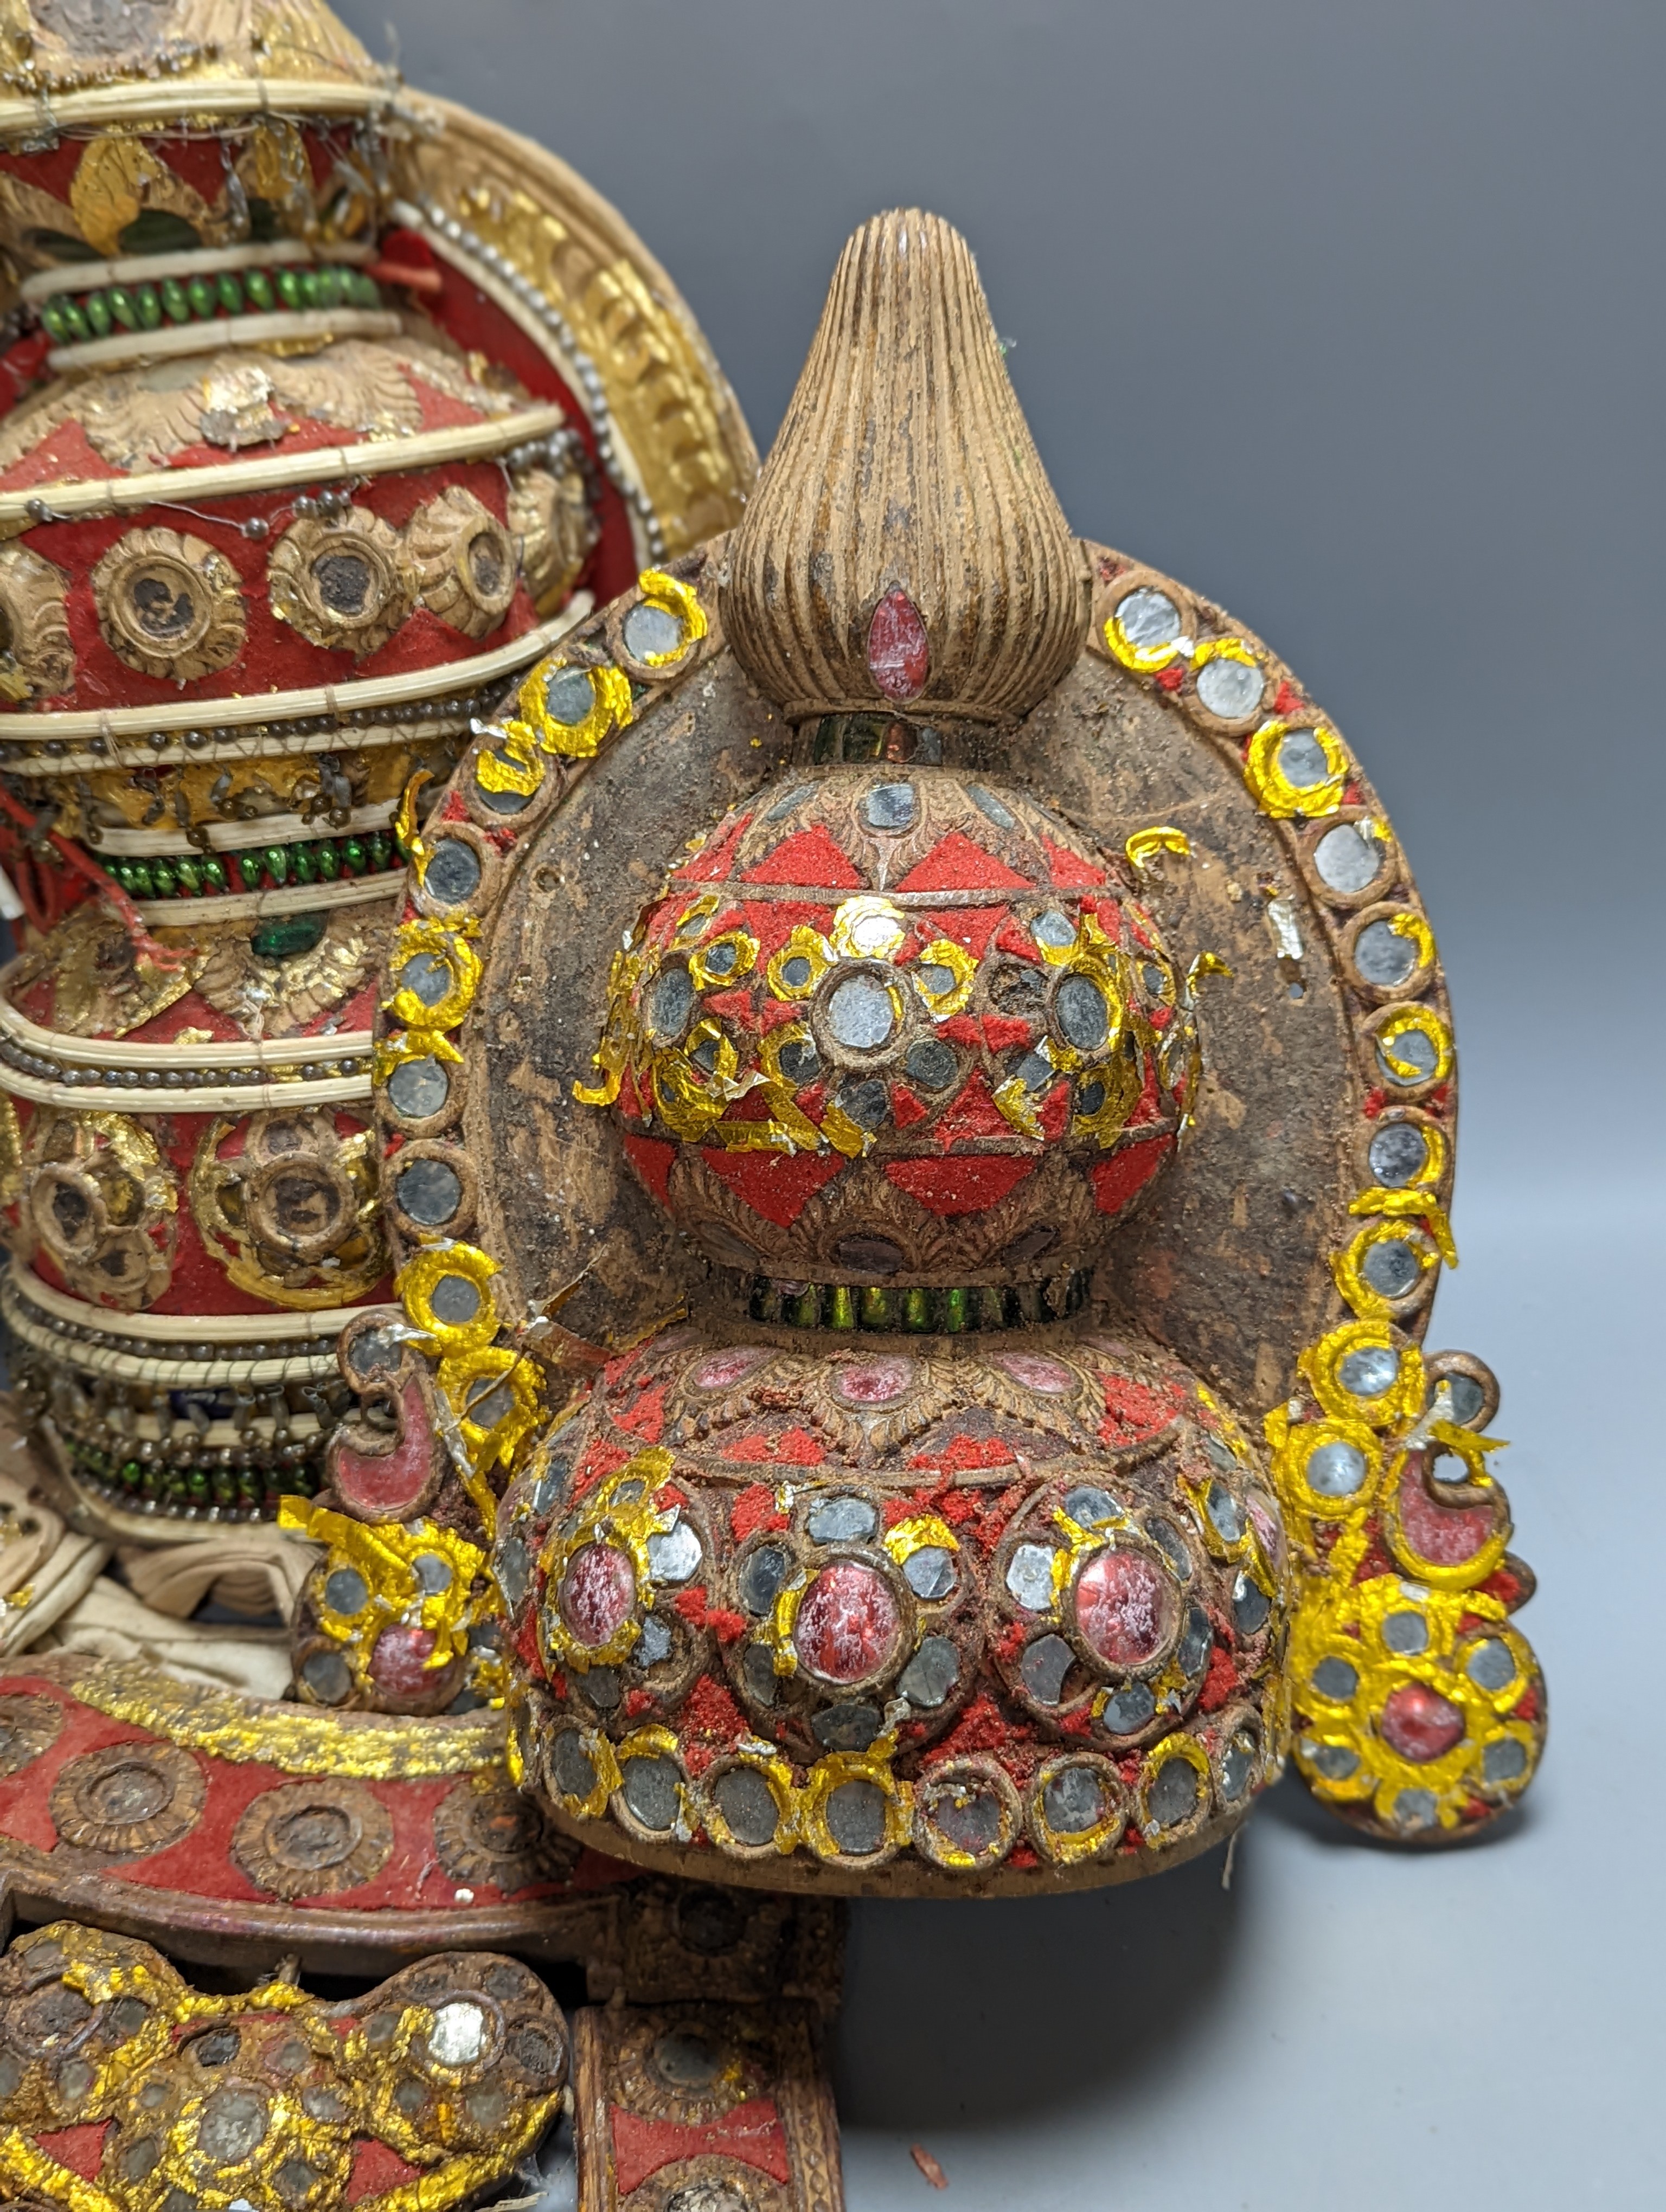 A group of Indian ornate wooden headdresses, masks etc